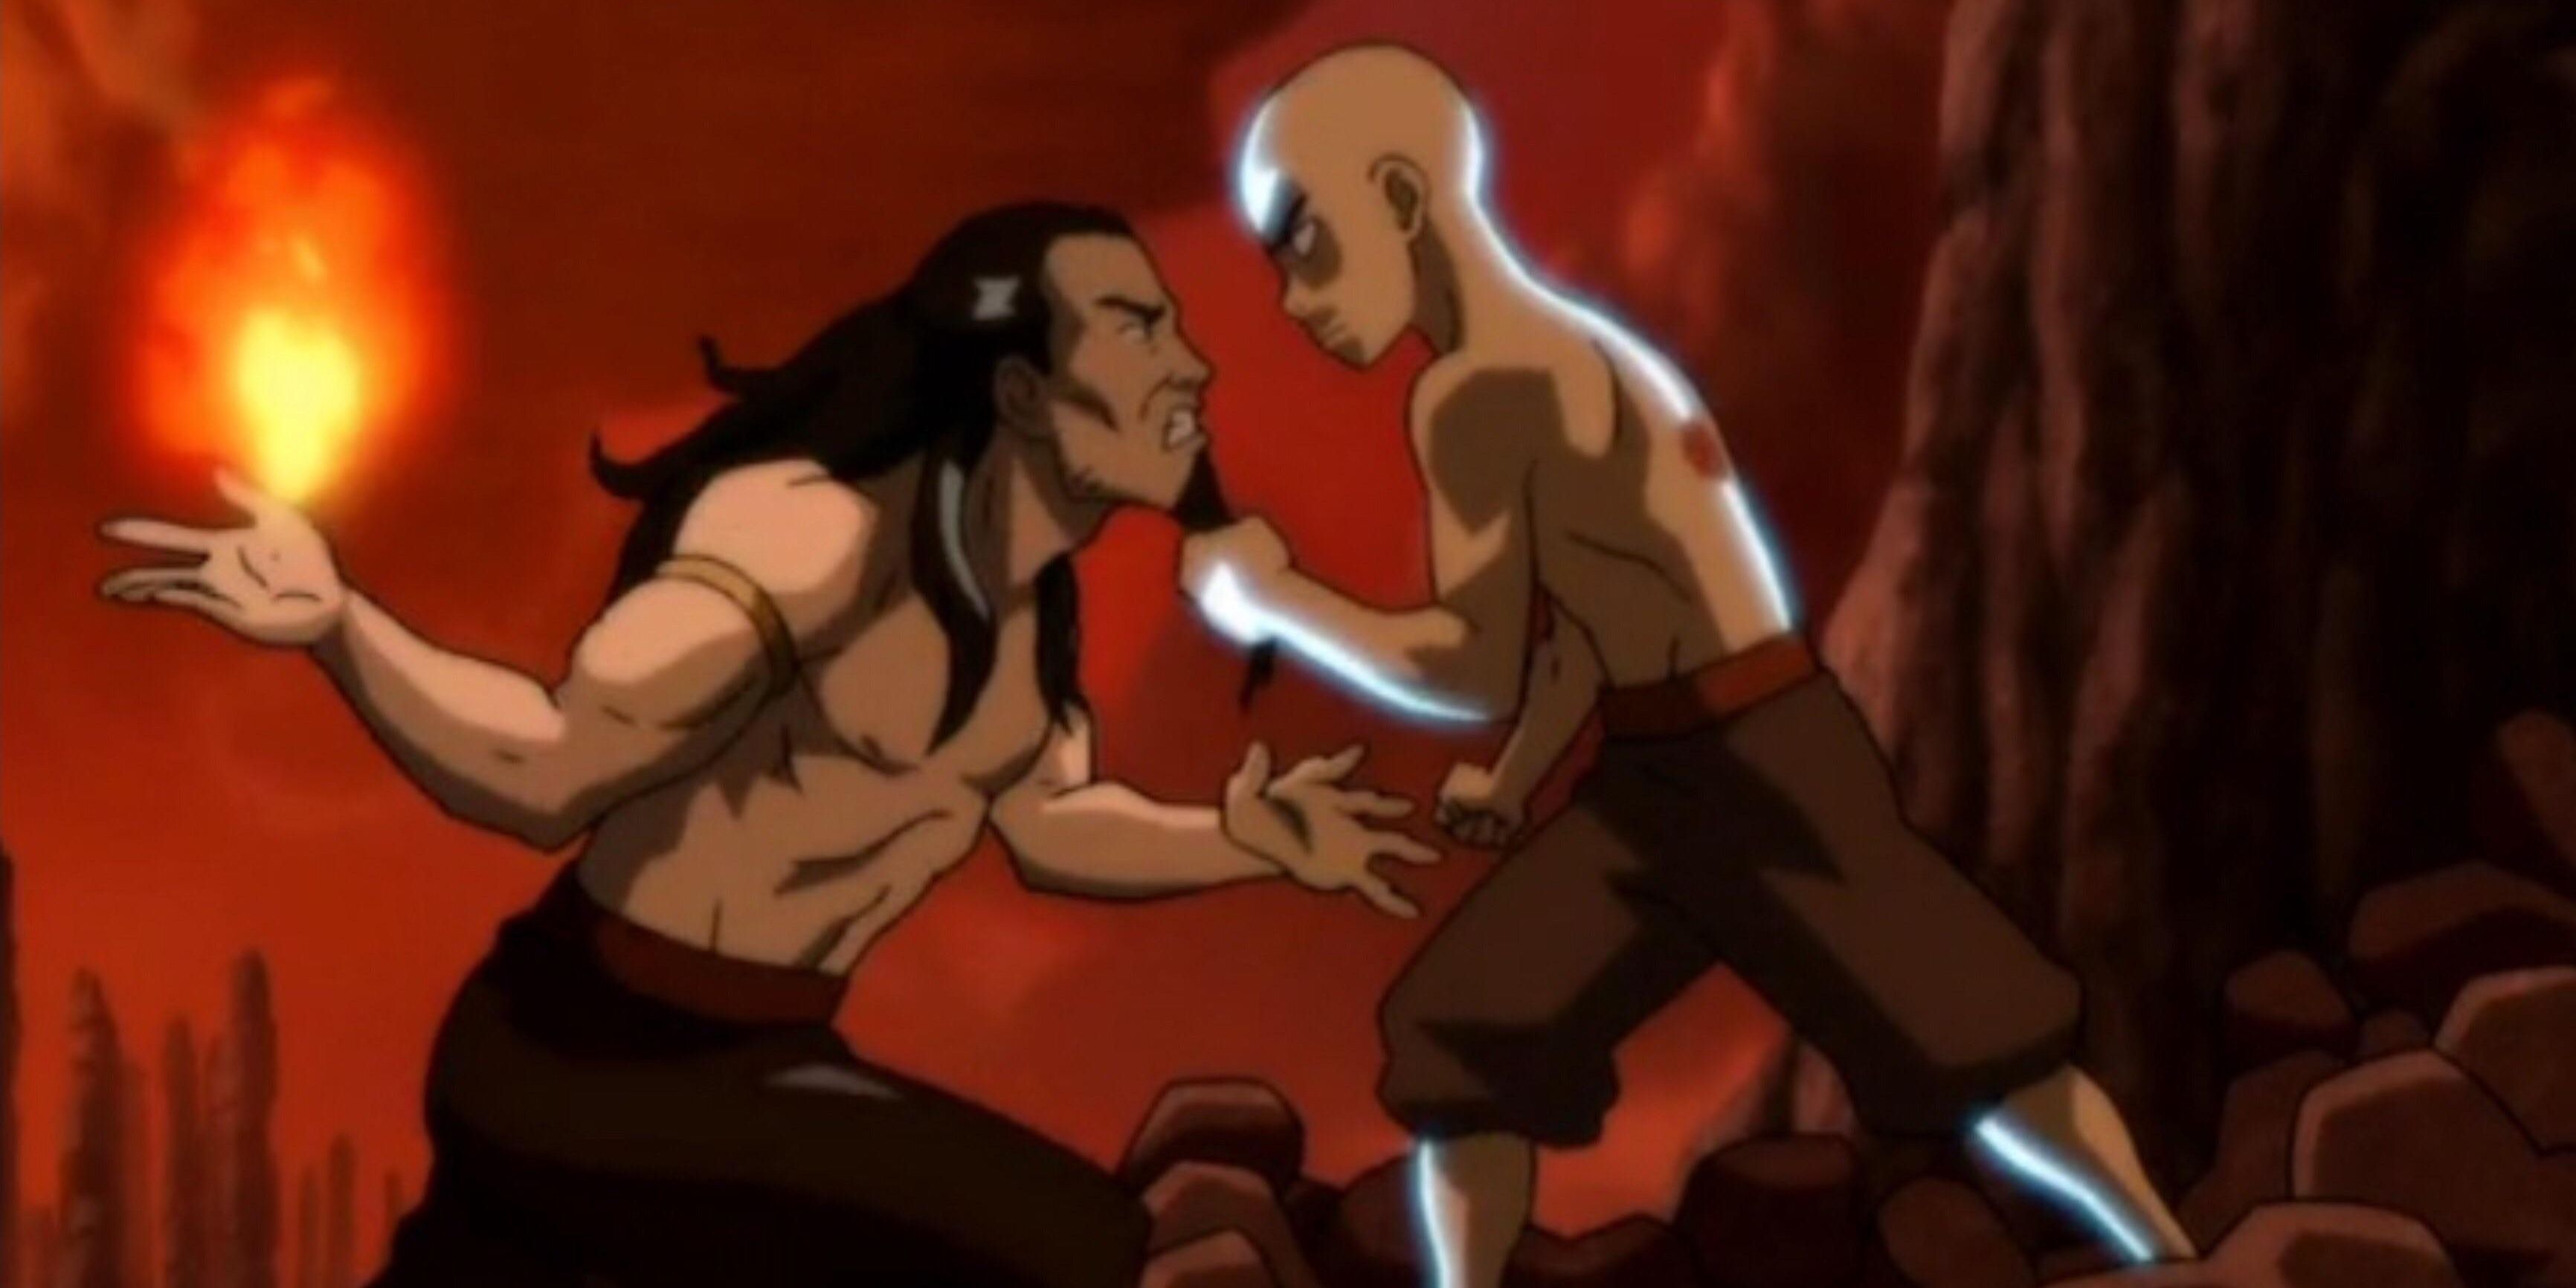 Aang grabs Ozai's beard while fighting him